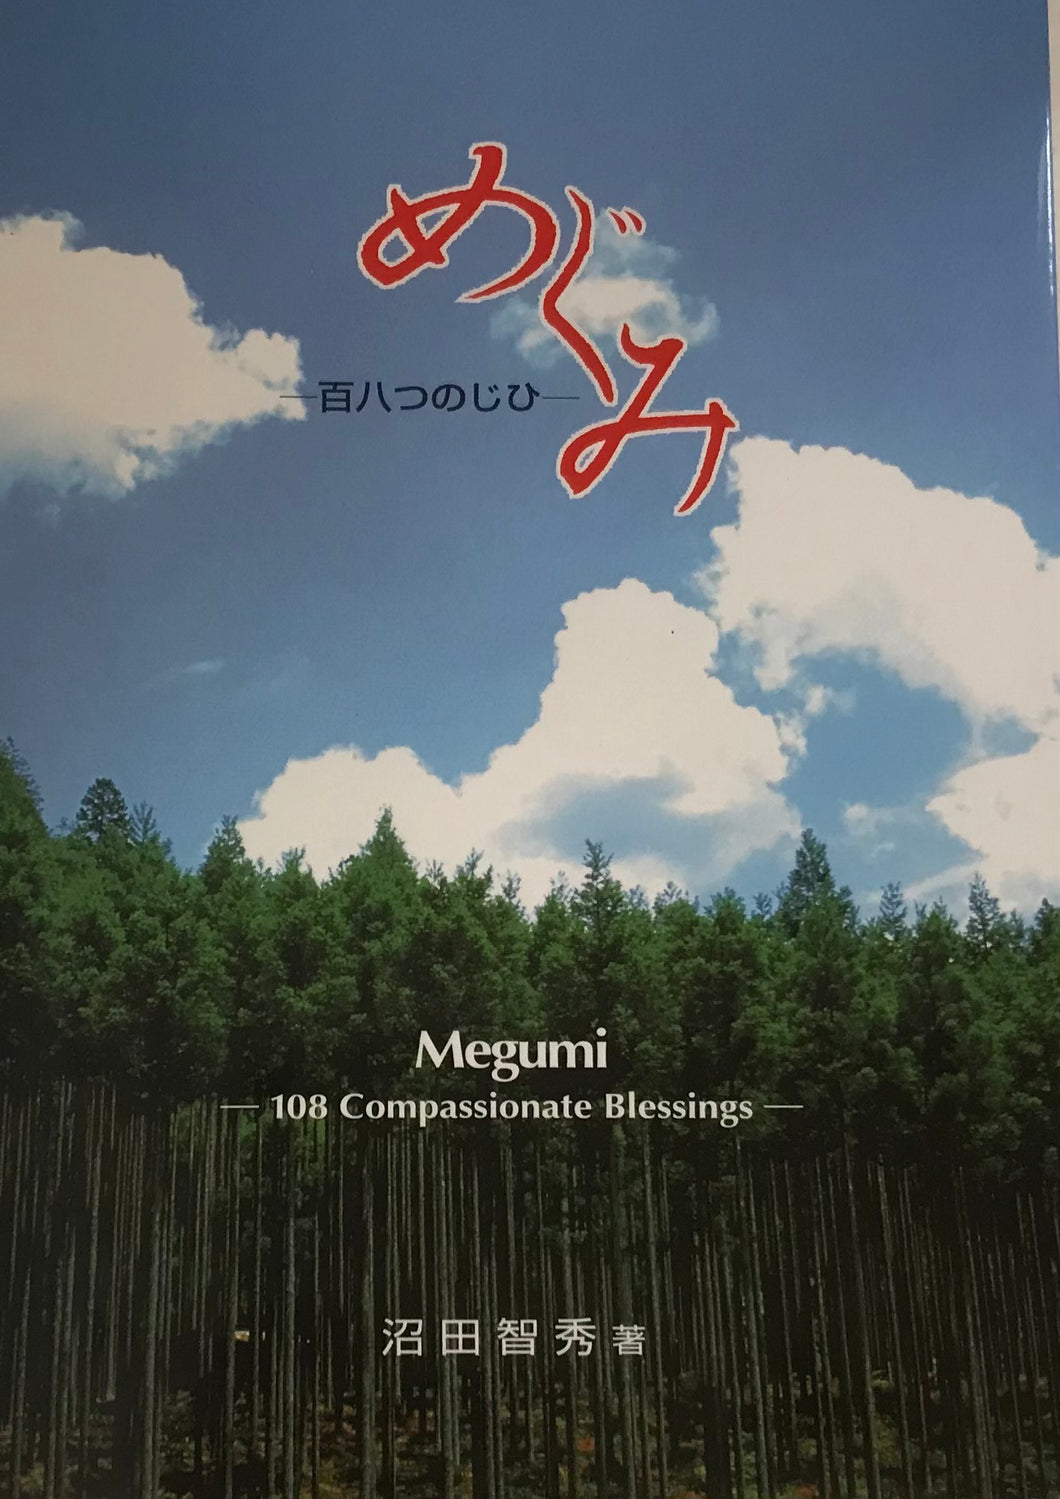 Megumi, 108 Compassionate Blessings